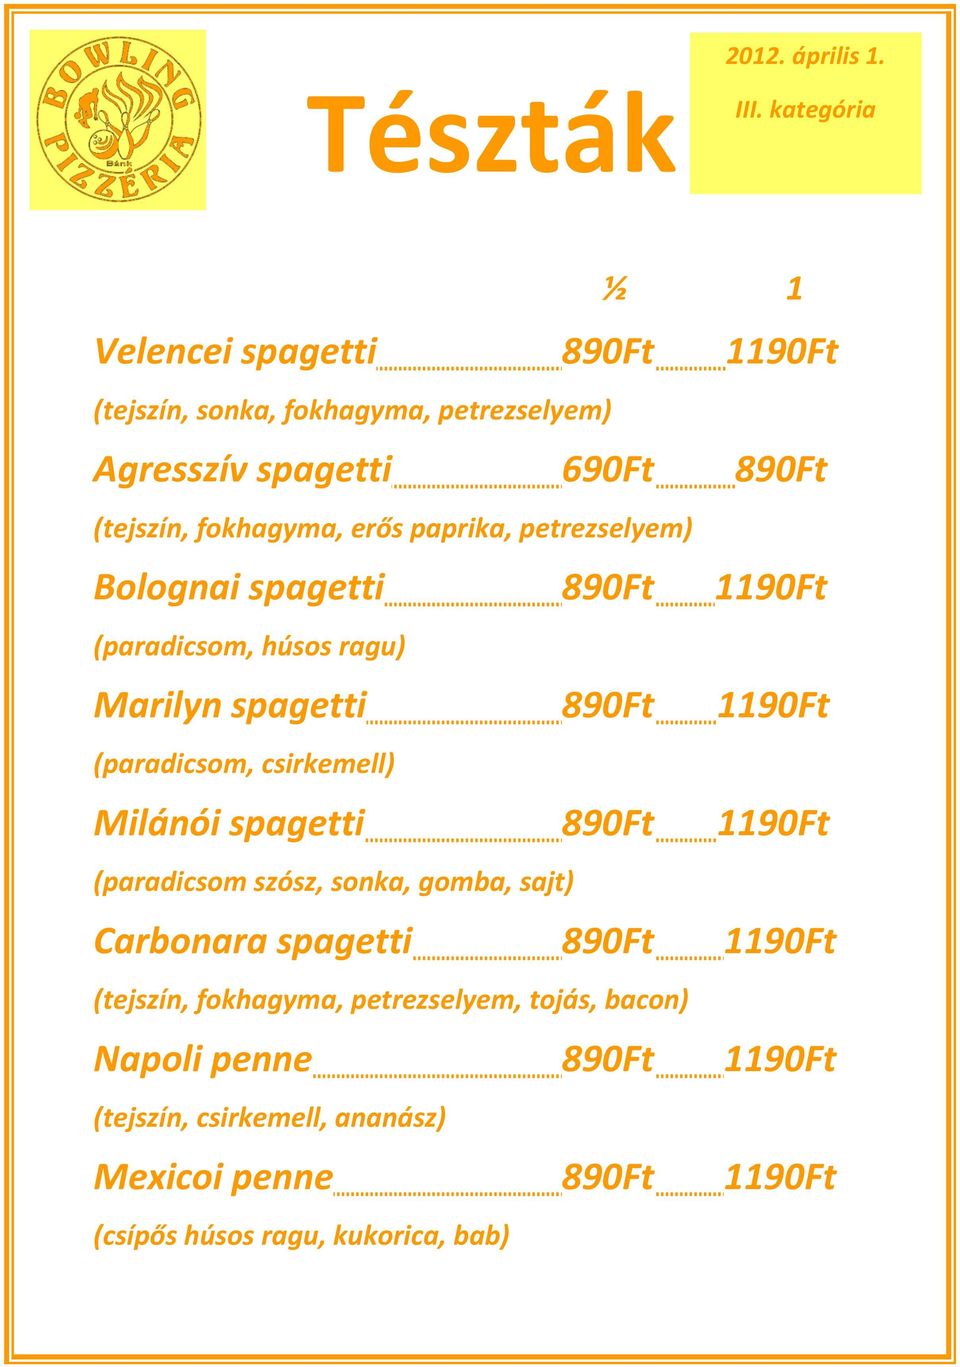 paprika, petrezselyem) Bolognai spagetti 890Ft 1190Ft (paradicsom, húsos ragu) Marilyn spagetti 890Ft 1190Ft (paradicsom, csirkemell) Milánói